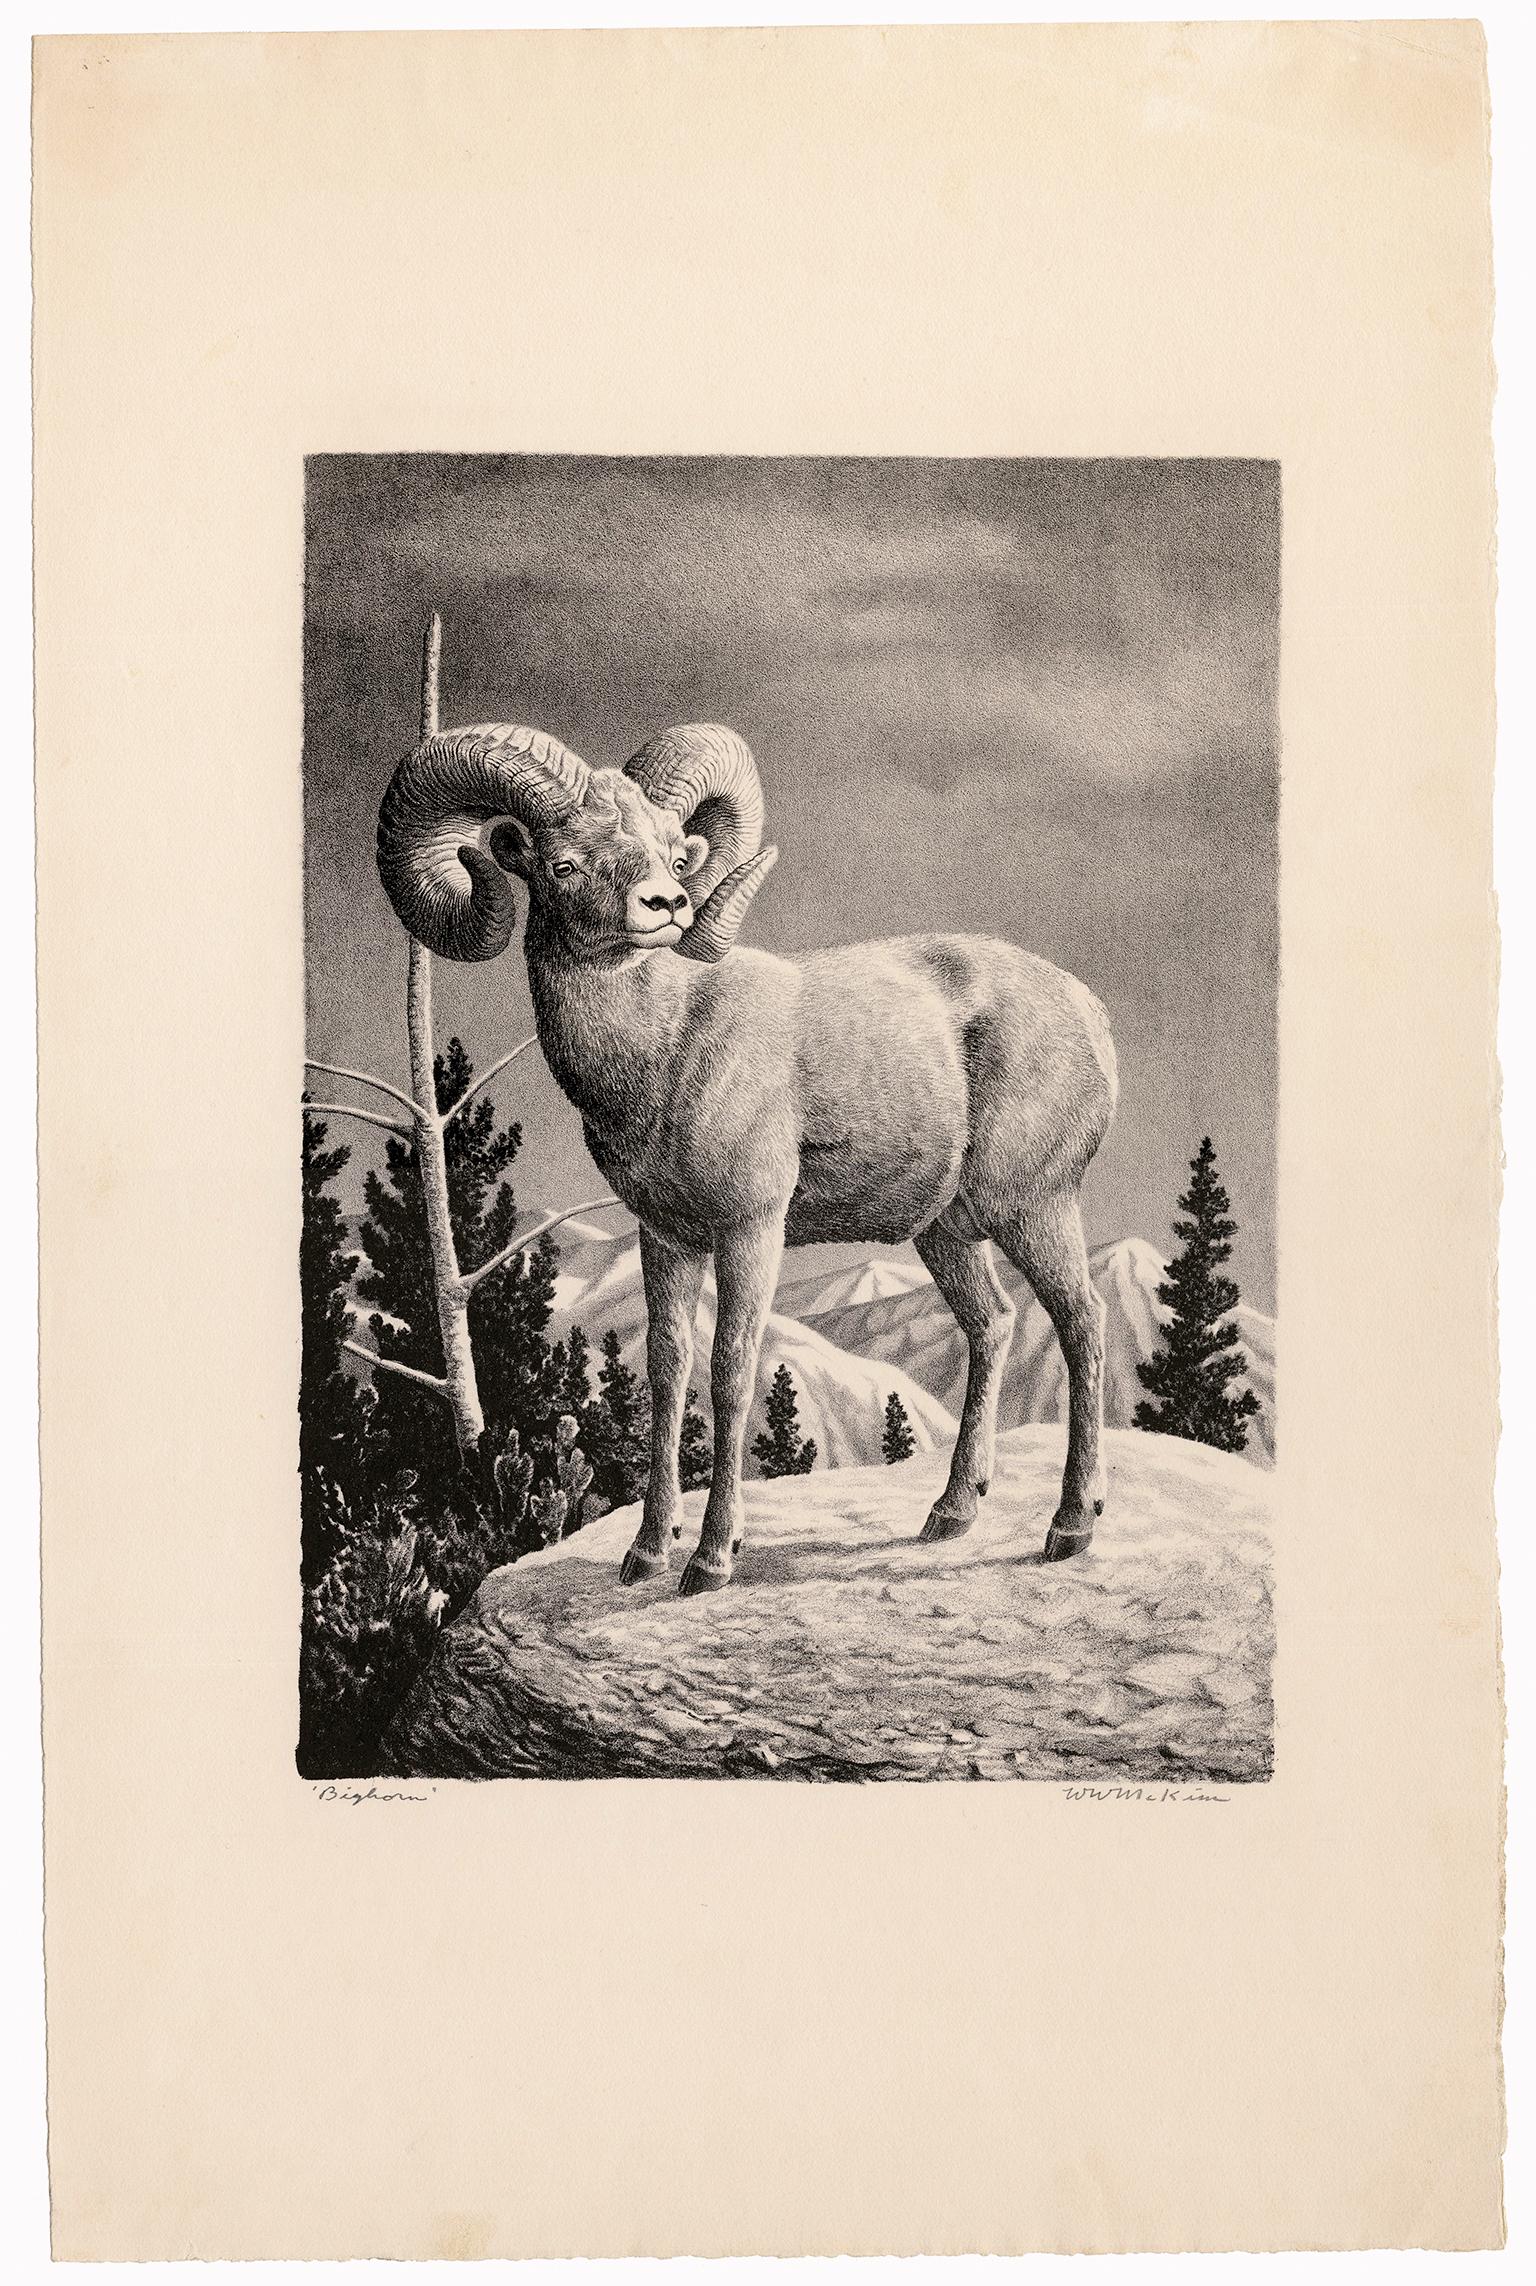 'Bighorn' — 1940s American Regionalism - Print by William McKim